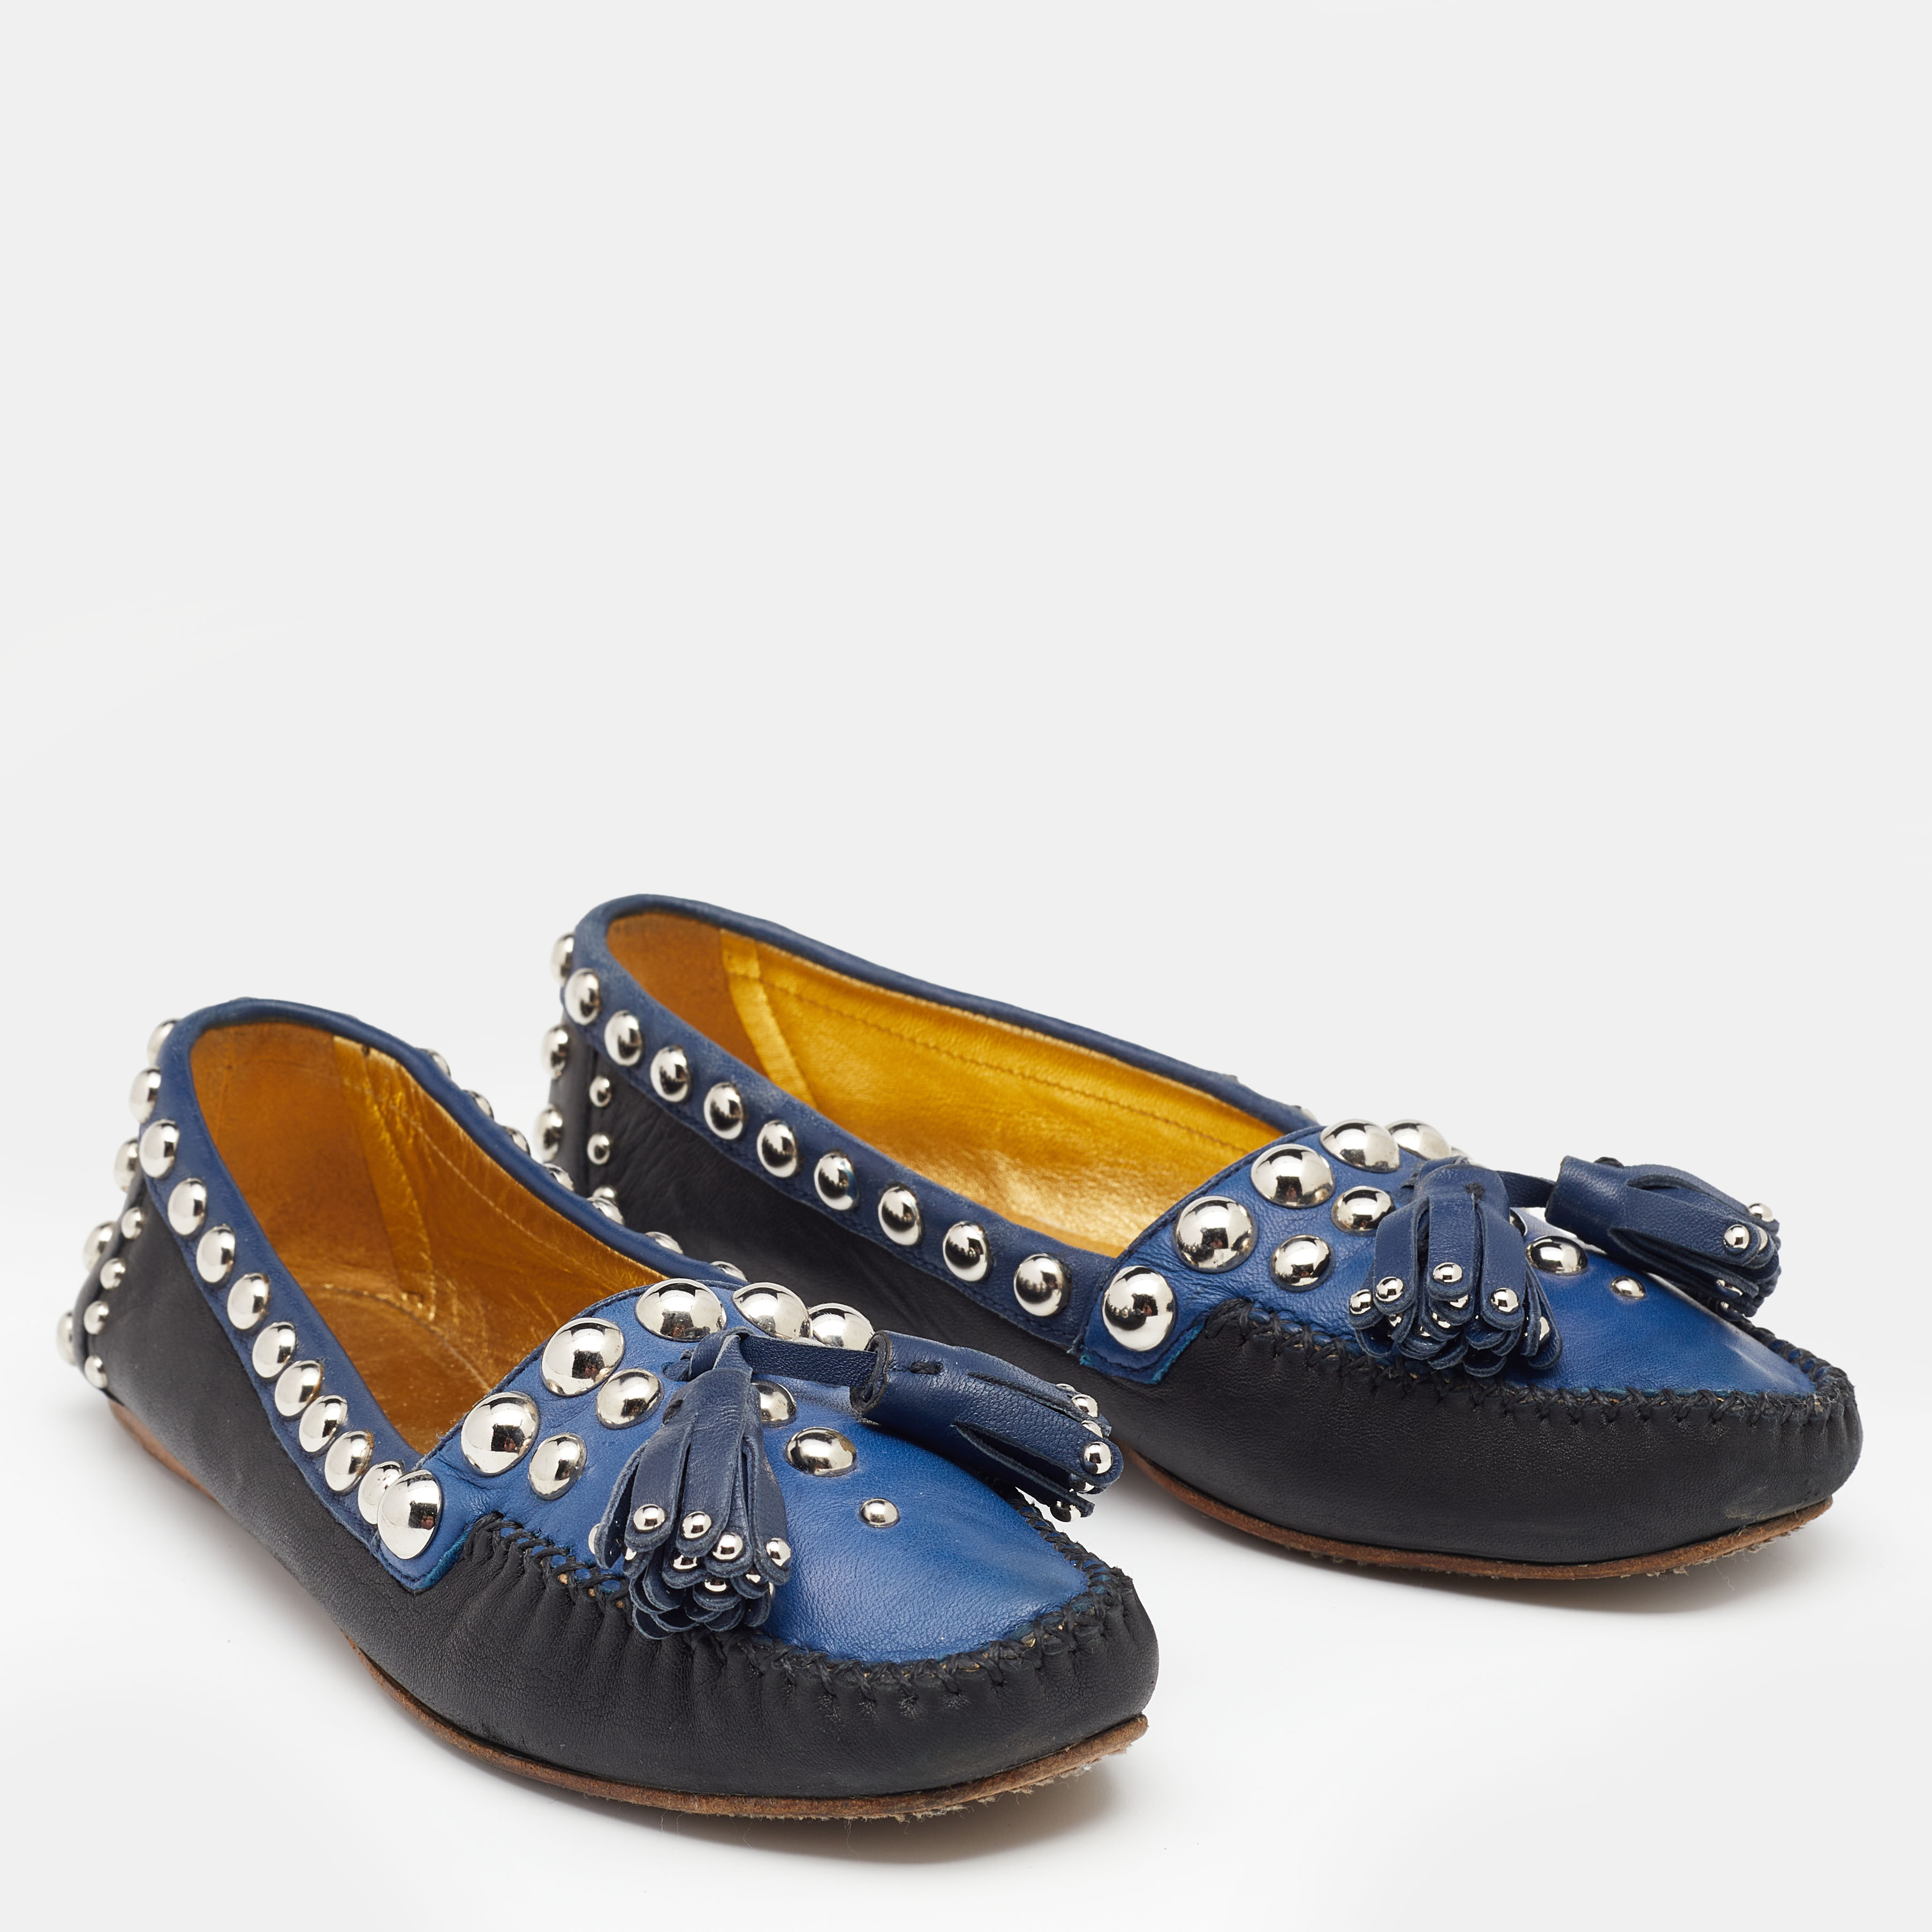 Prada Black/Blue Leather Studded Slip On Loafers Size 36